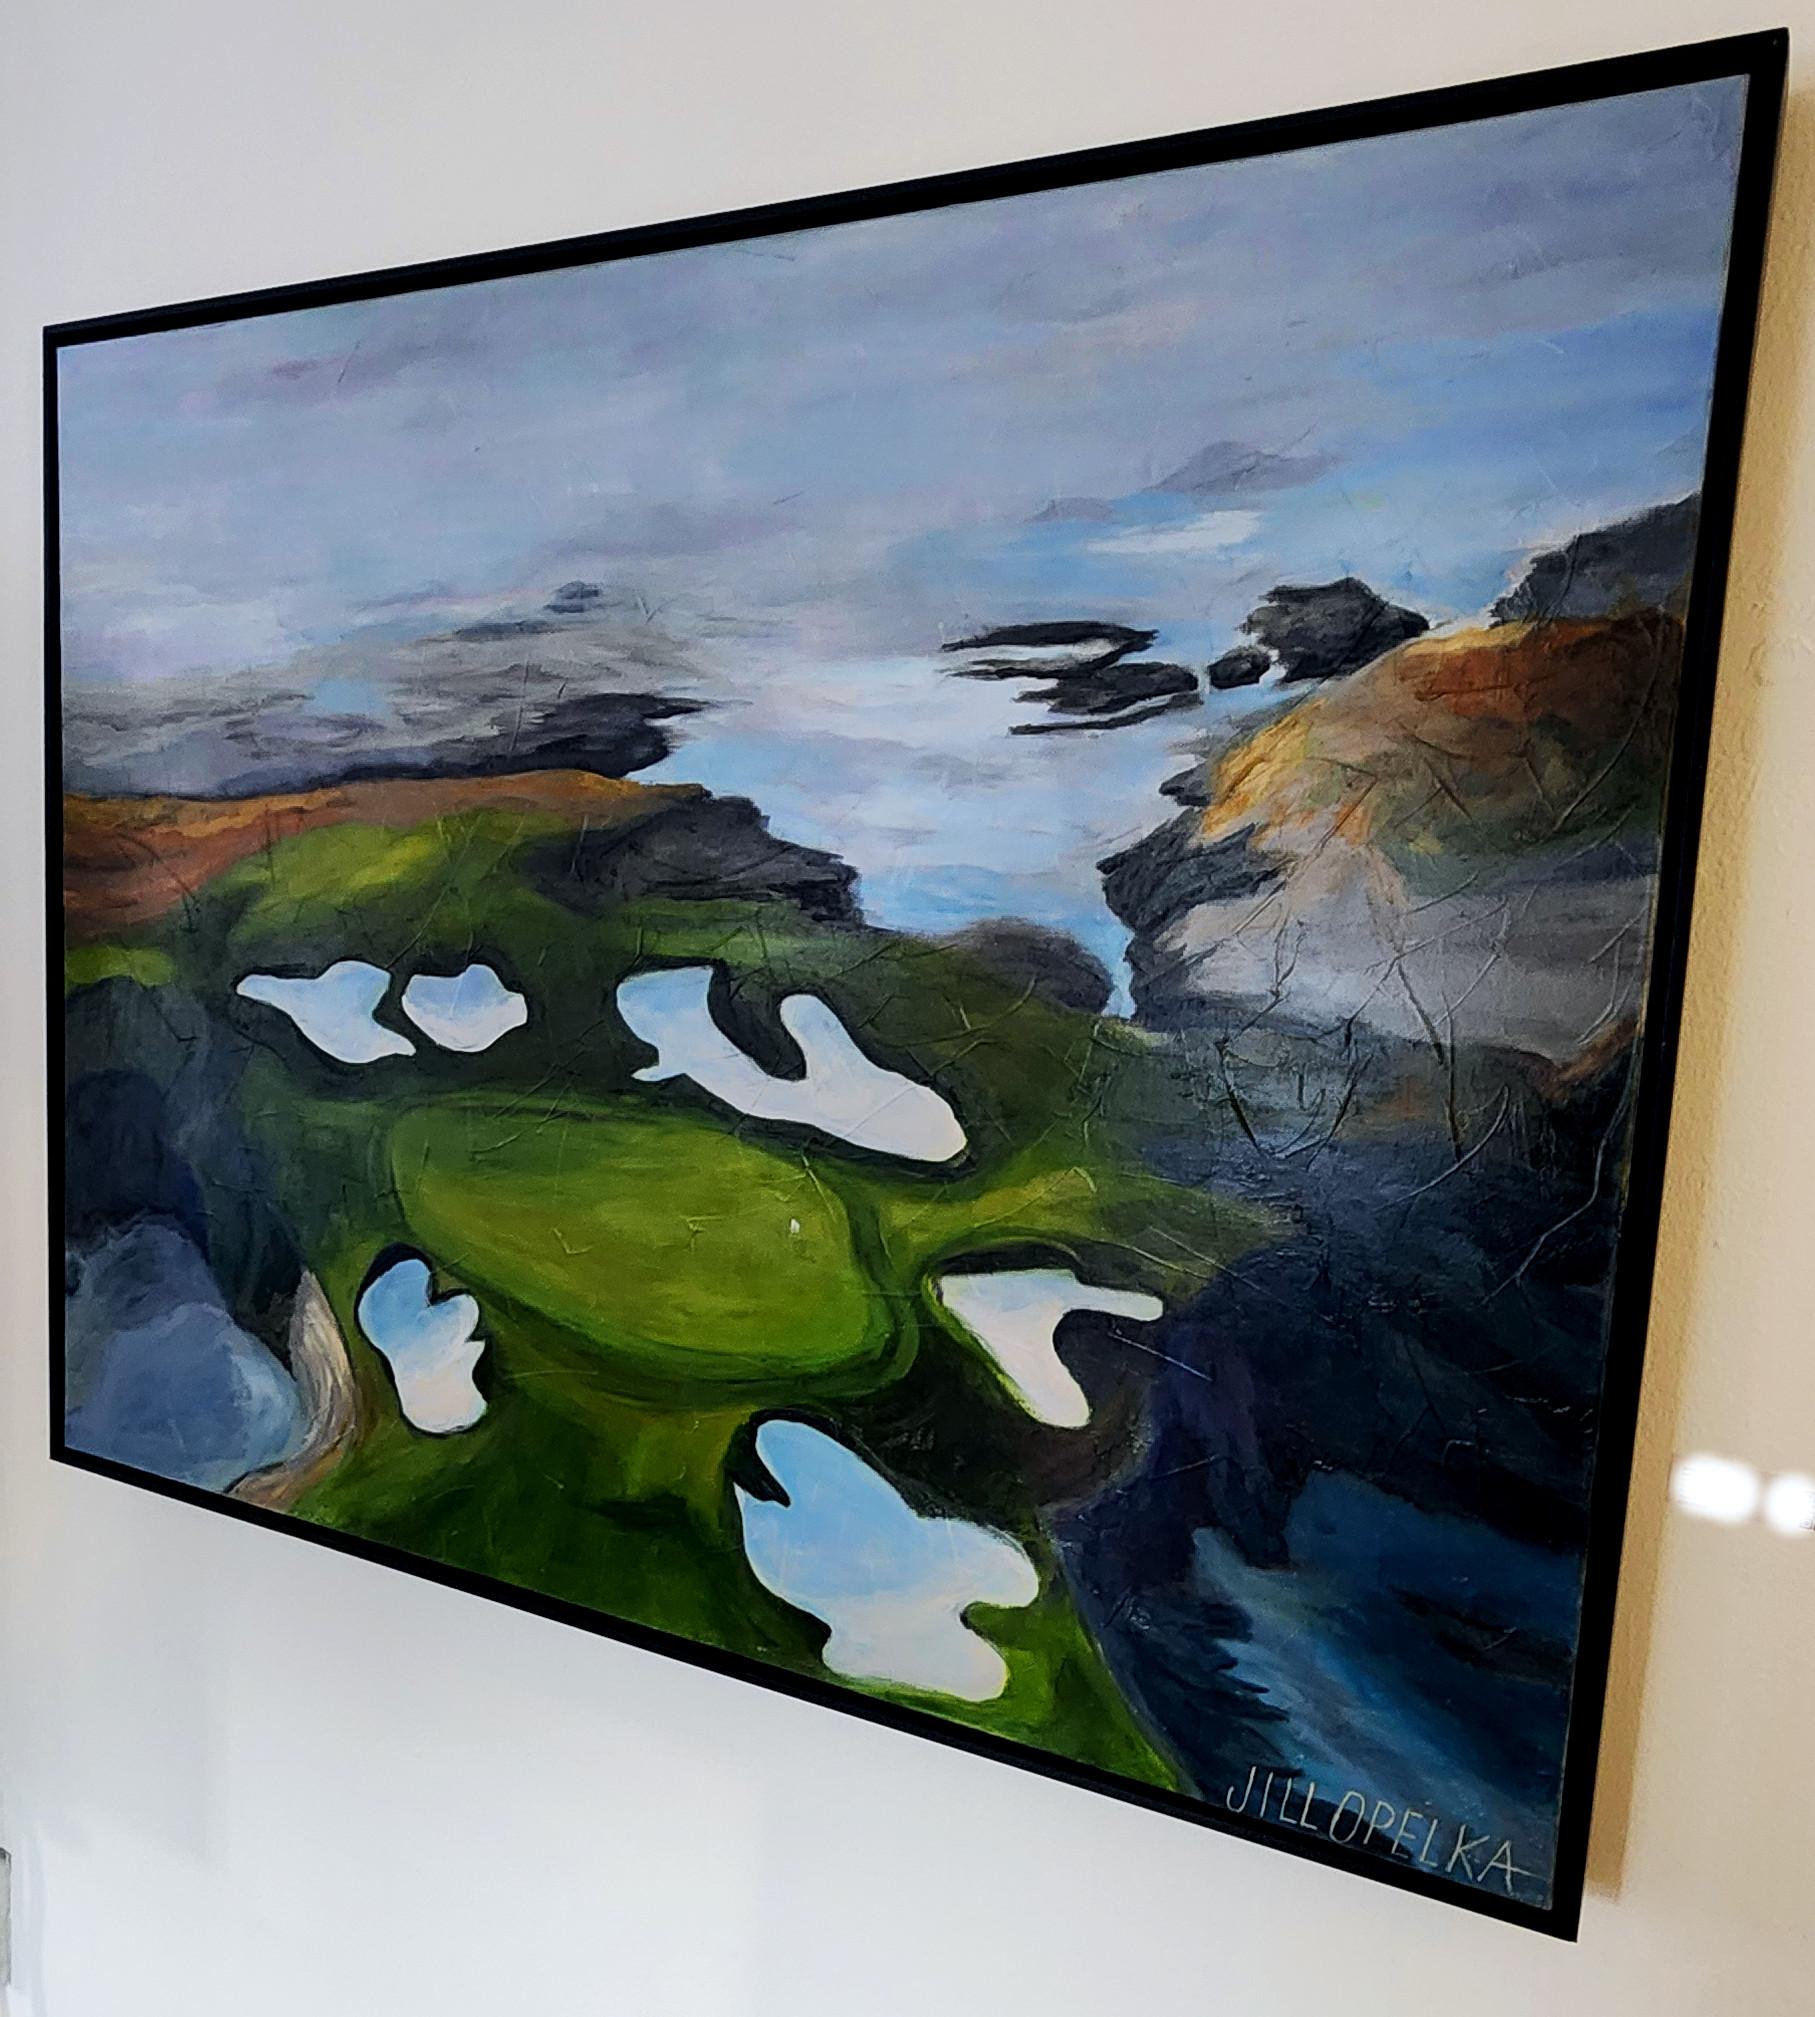 Cypress (Landscape, Pebble Beach, California, Golf Course, Monterey Peninsula) - Contemporary Painting by Jill Opelka